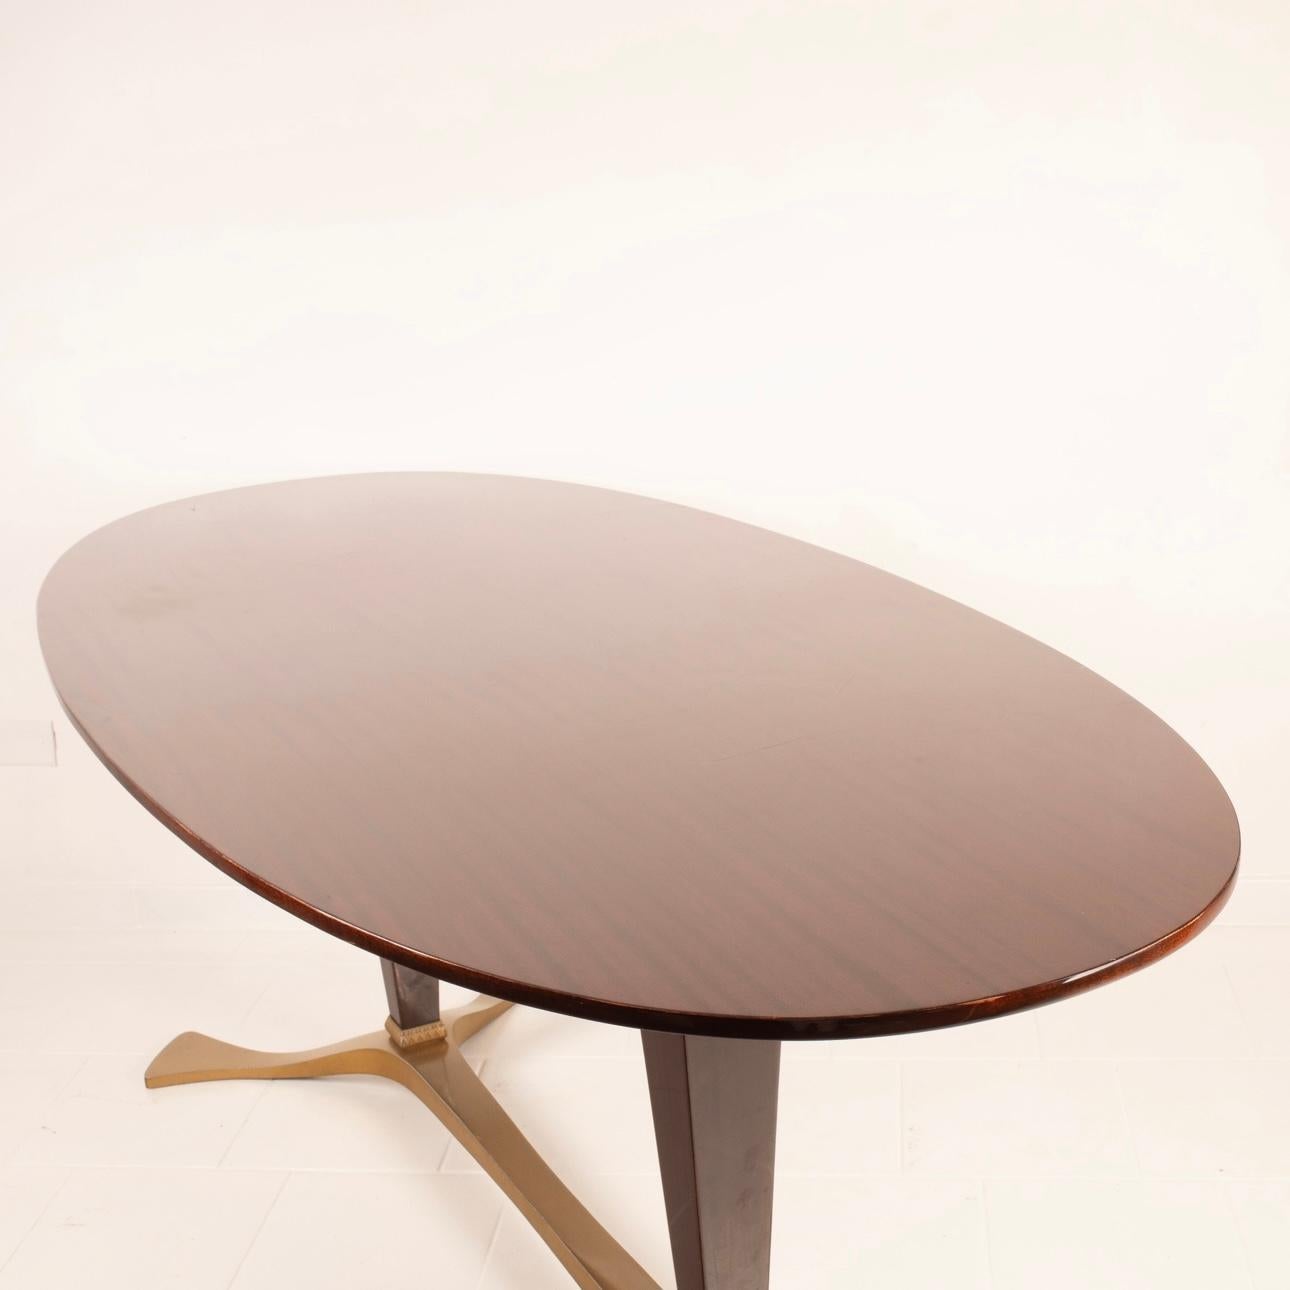 Table by Fulvio Brembilla for RB Design 1950's For Sale 2